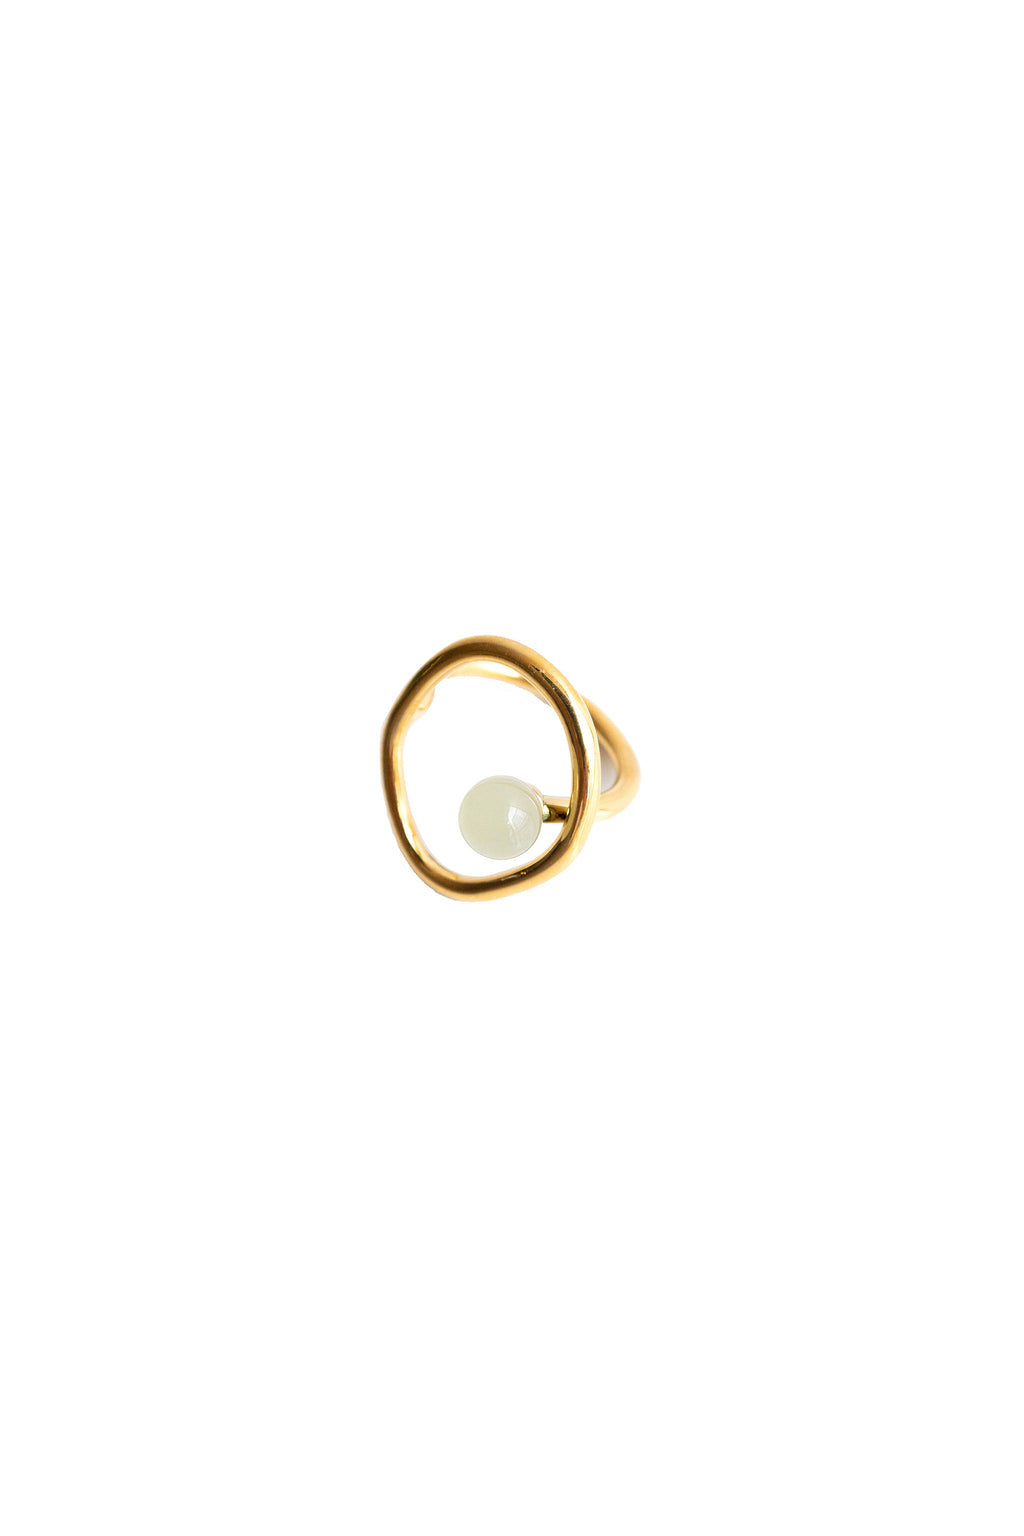 seree-cosmos-gold-ring-with-jade-bead